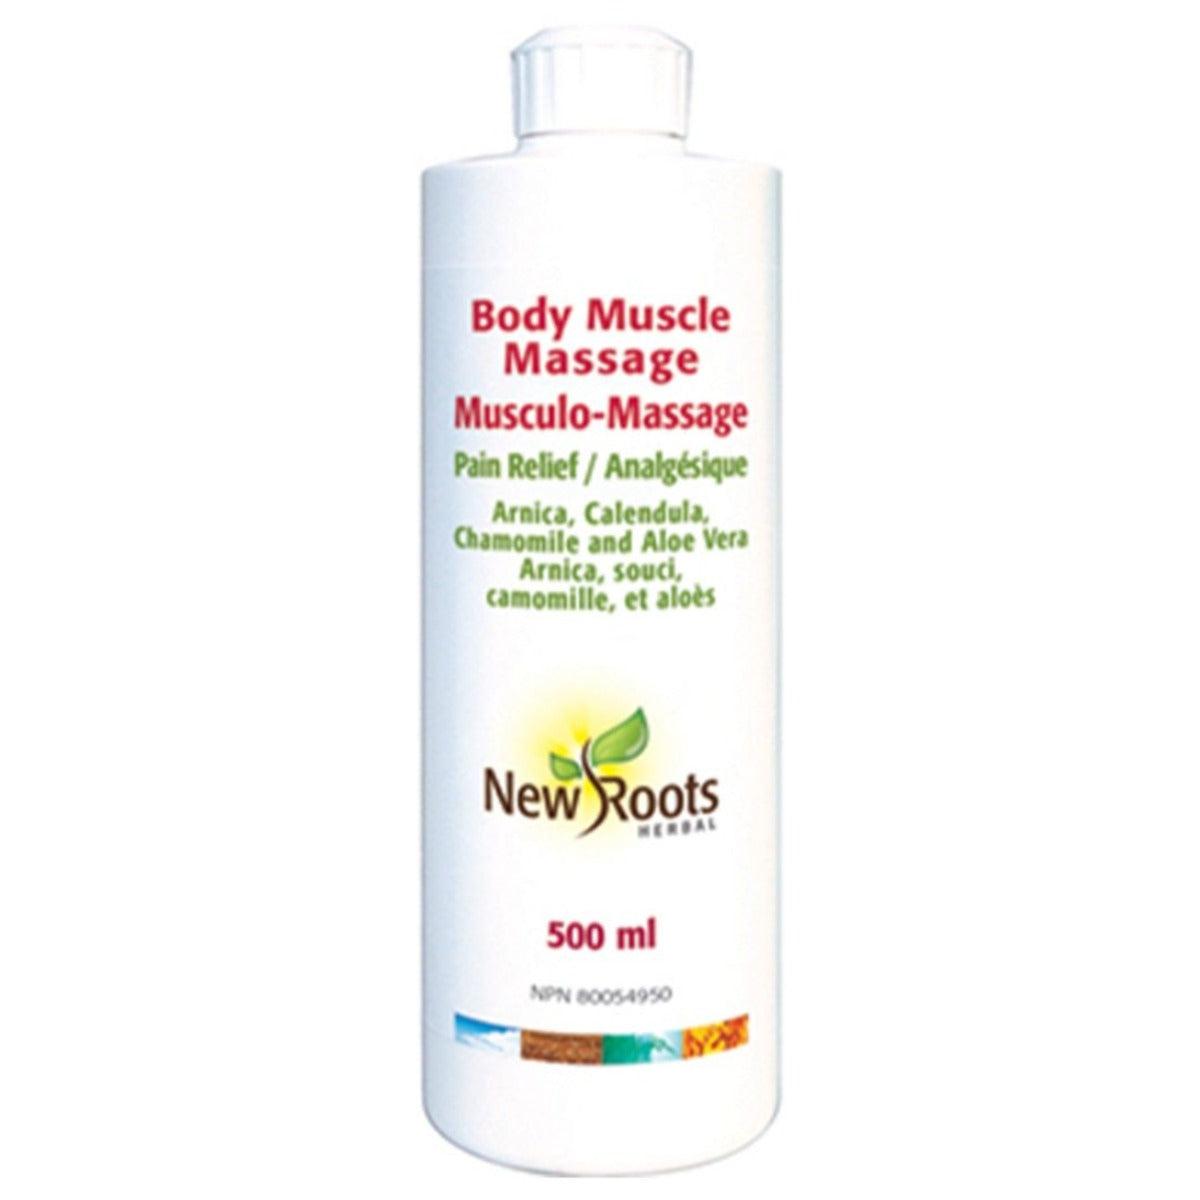 New Roots Body Muscle Massage 500ml Body Moisturizer at Village Vitamin Store